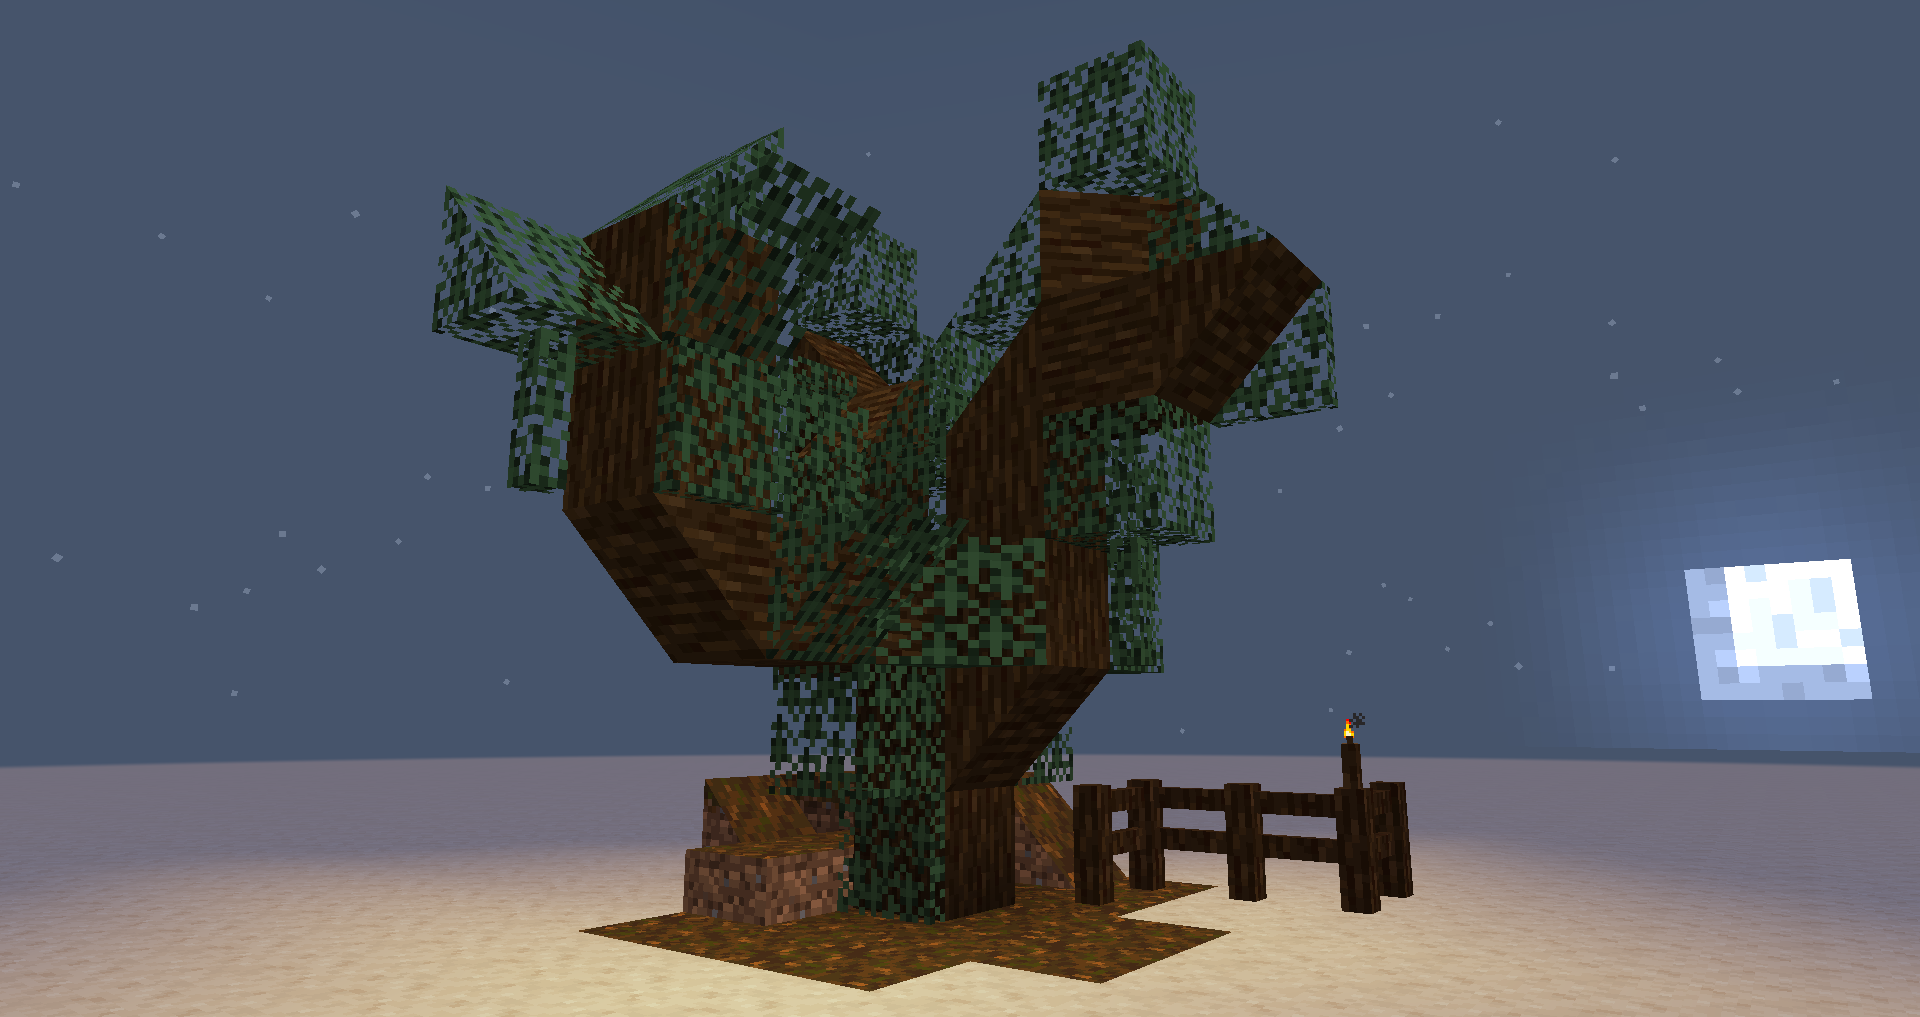 Here's tree